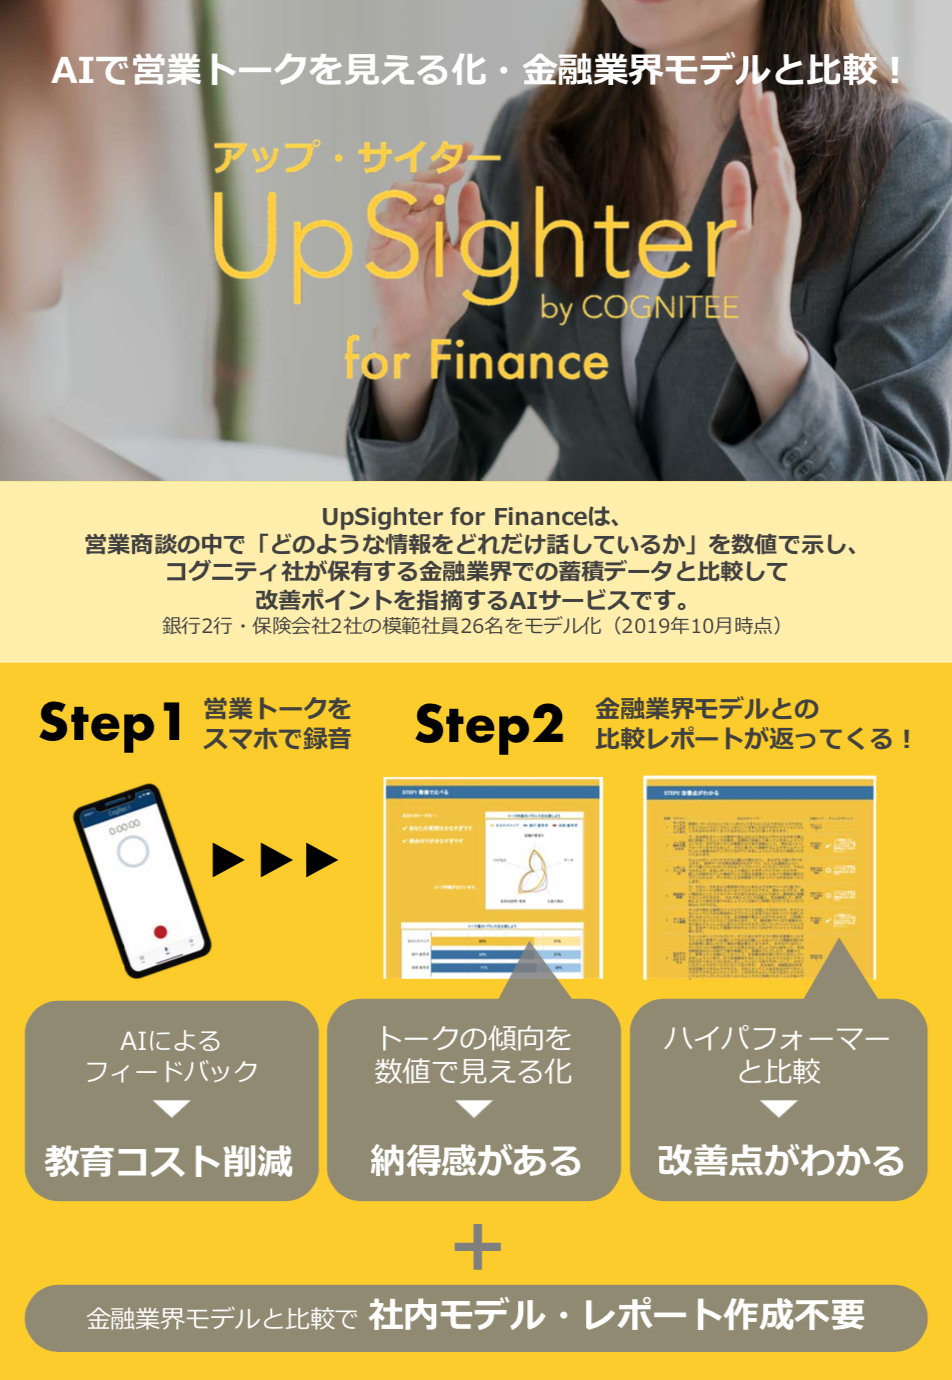 UpSighter for Finance 概要説明資料